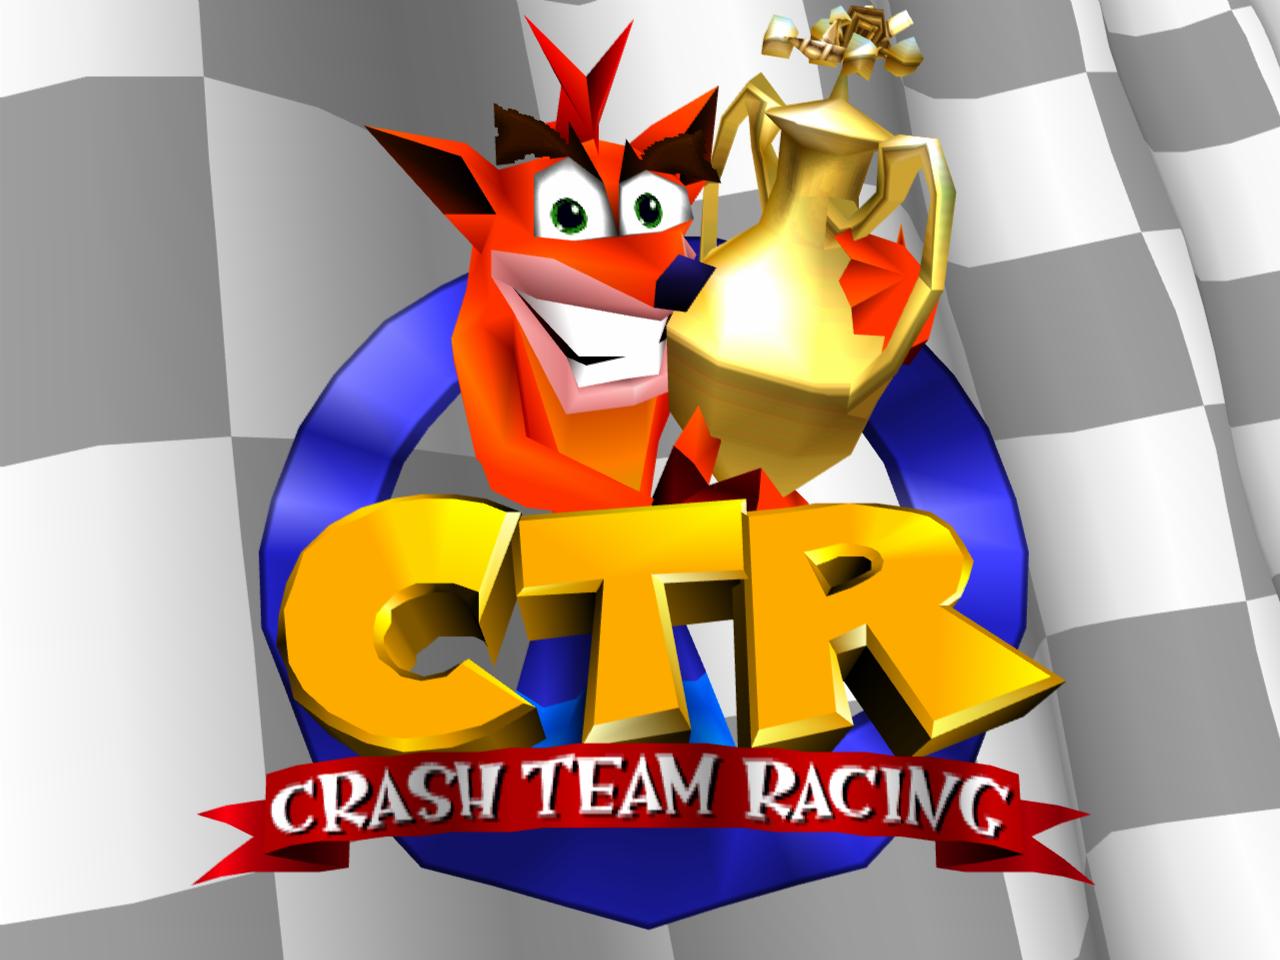 Crash Team Racing Backgrounds on Wallpapers Vista